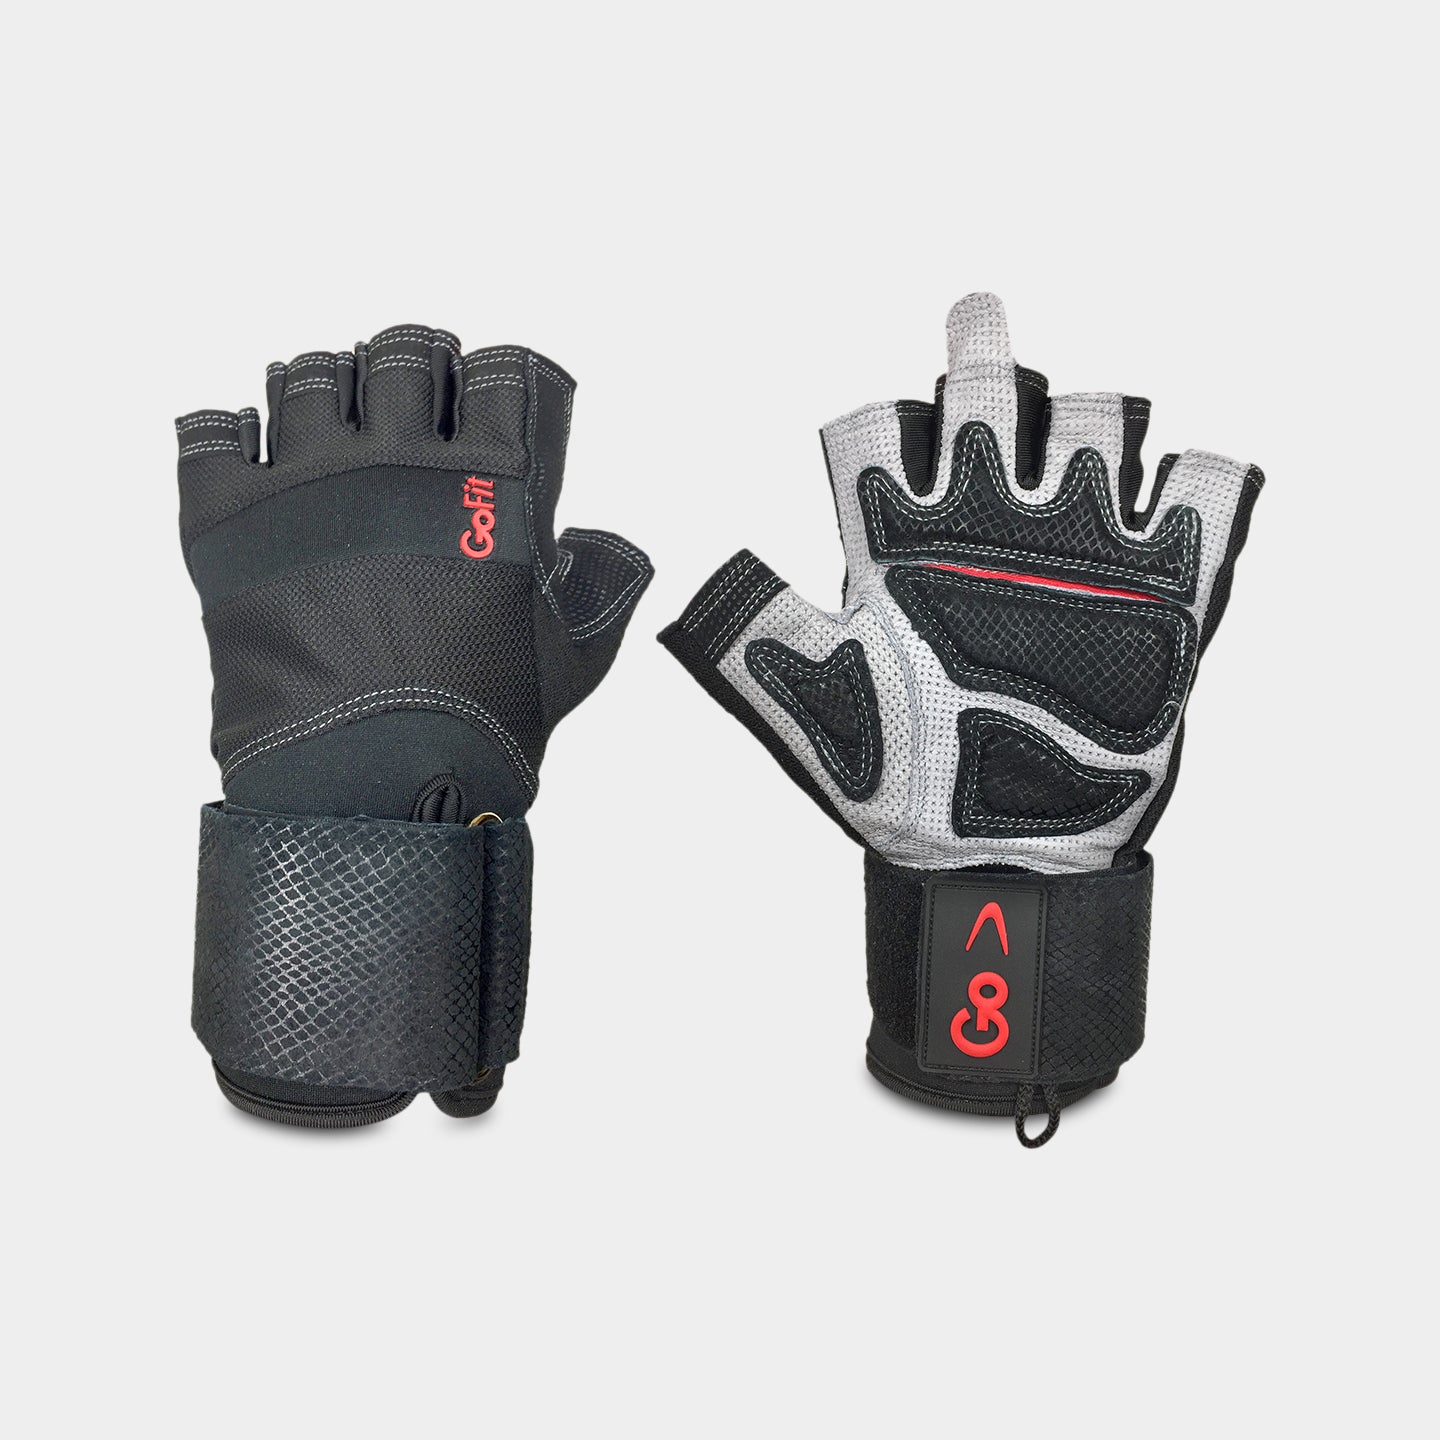 GoFit Men's Extreme AG Training Glove w/ Wrist Wrap A1